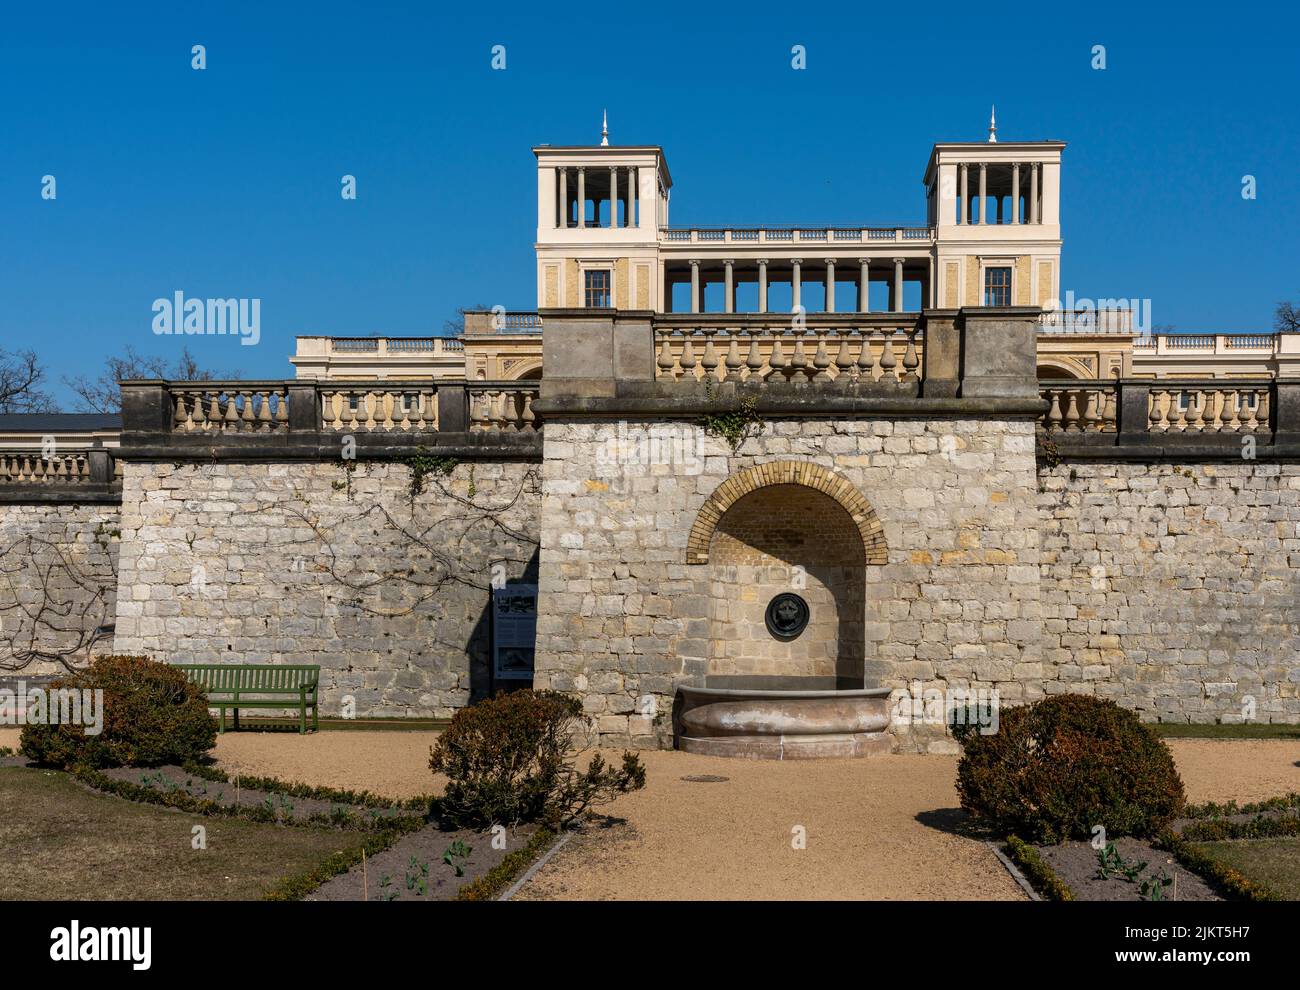 Orangery Palace In Sanssouci Park, UNESCO World Heritage Site, Potsdam Stock Photo